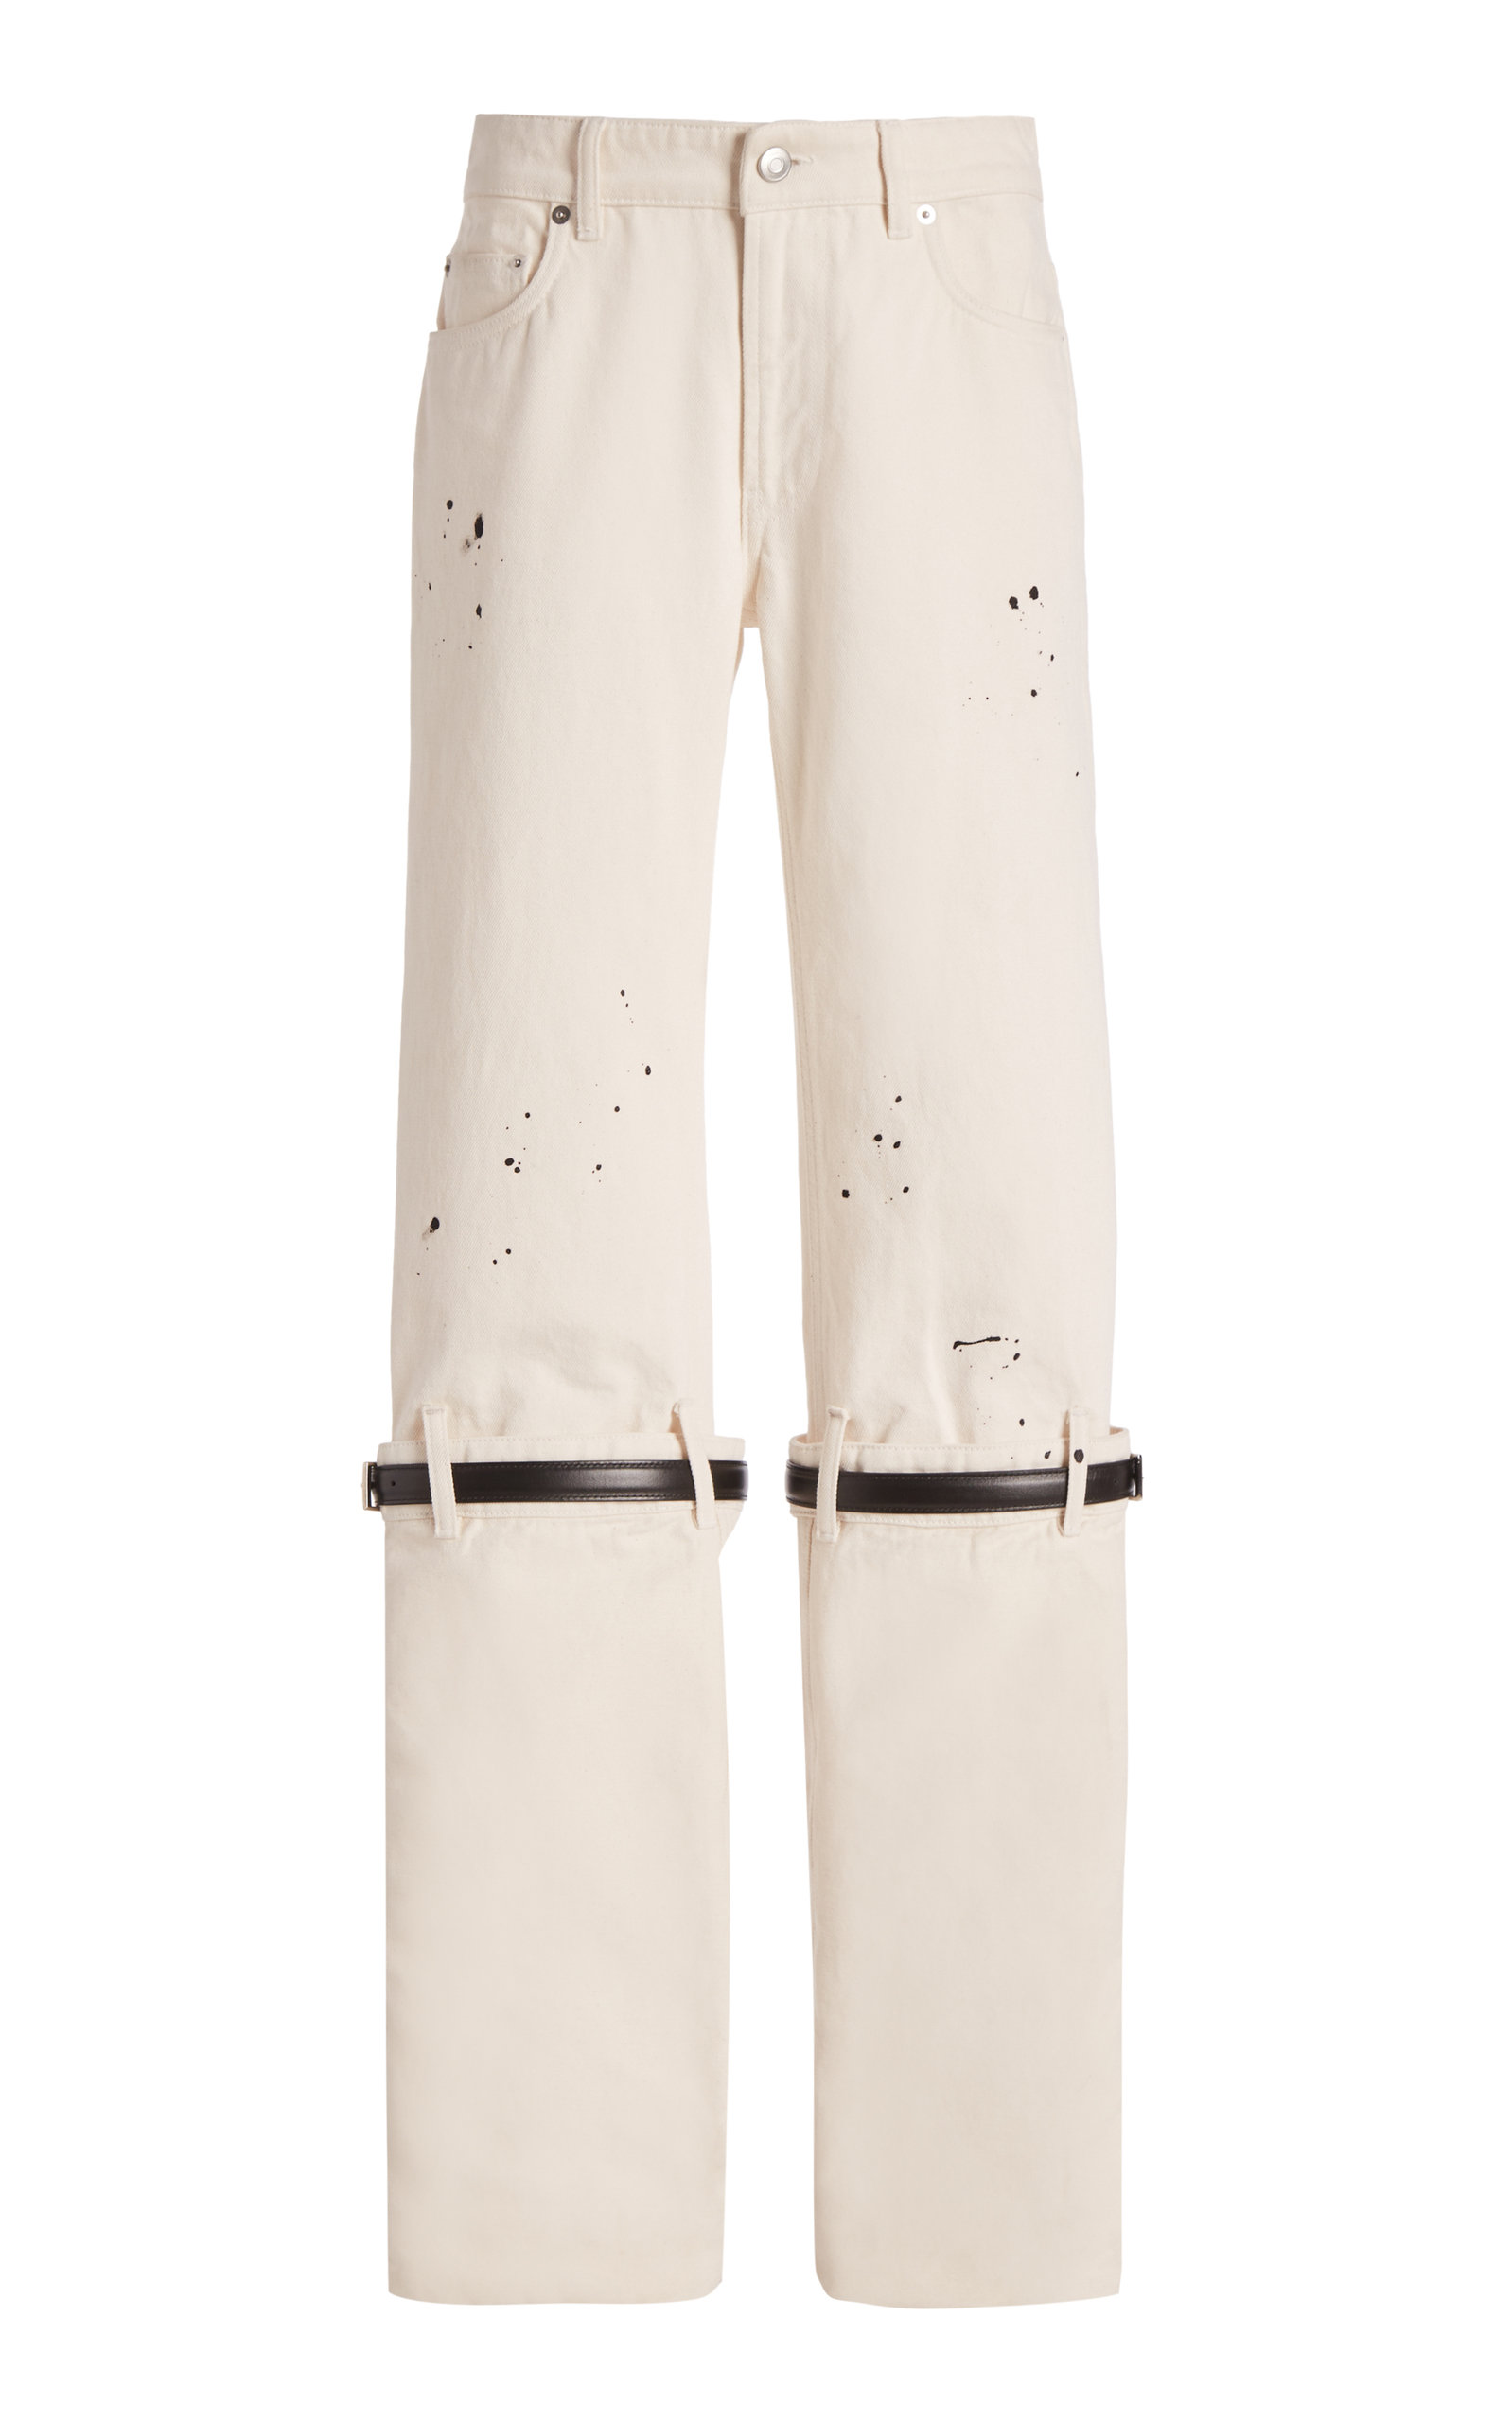 Coperni - Women's Hybrid Denim Pants - White/medium Wash - Only At Moda Operandi